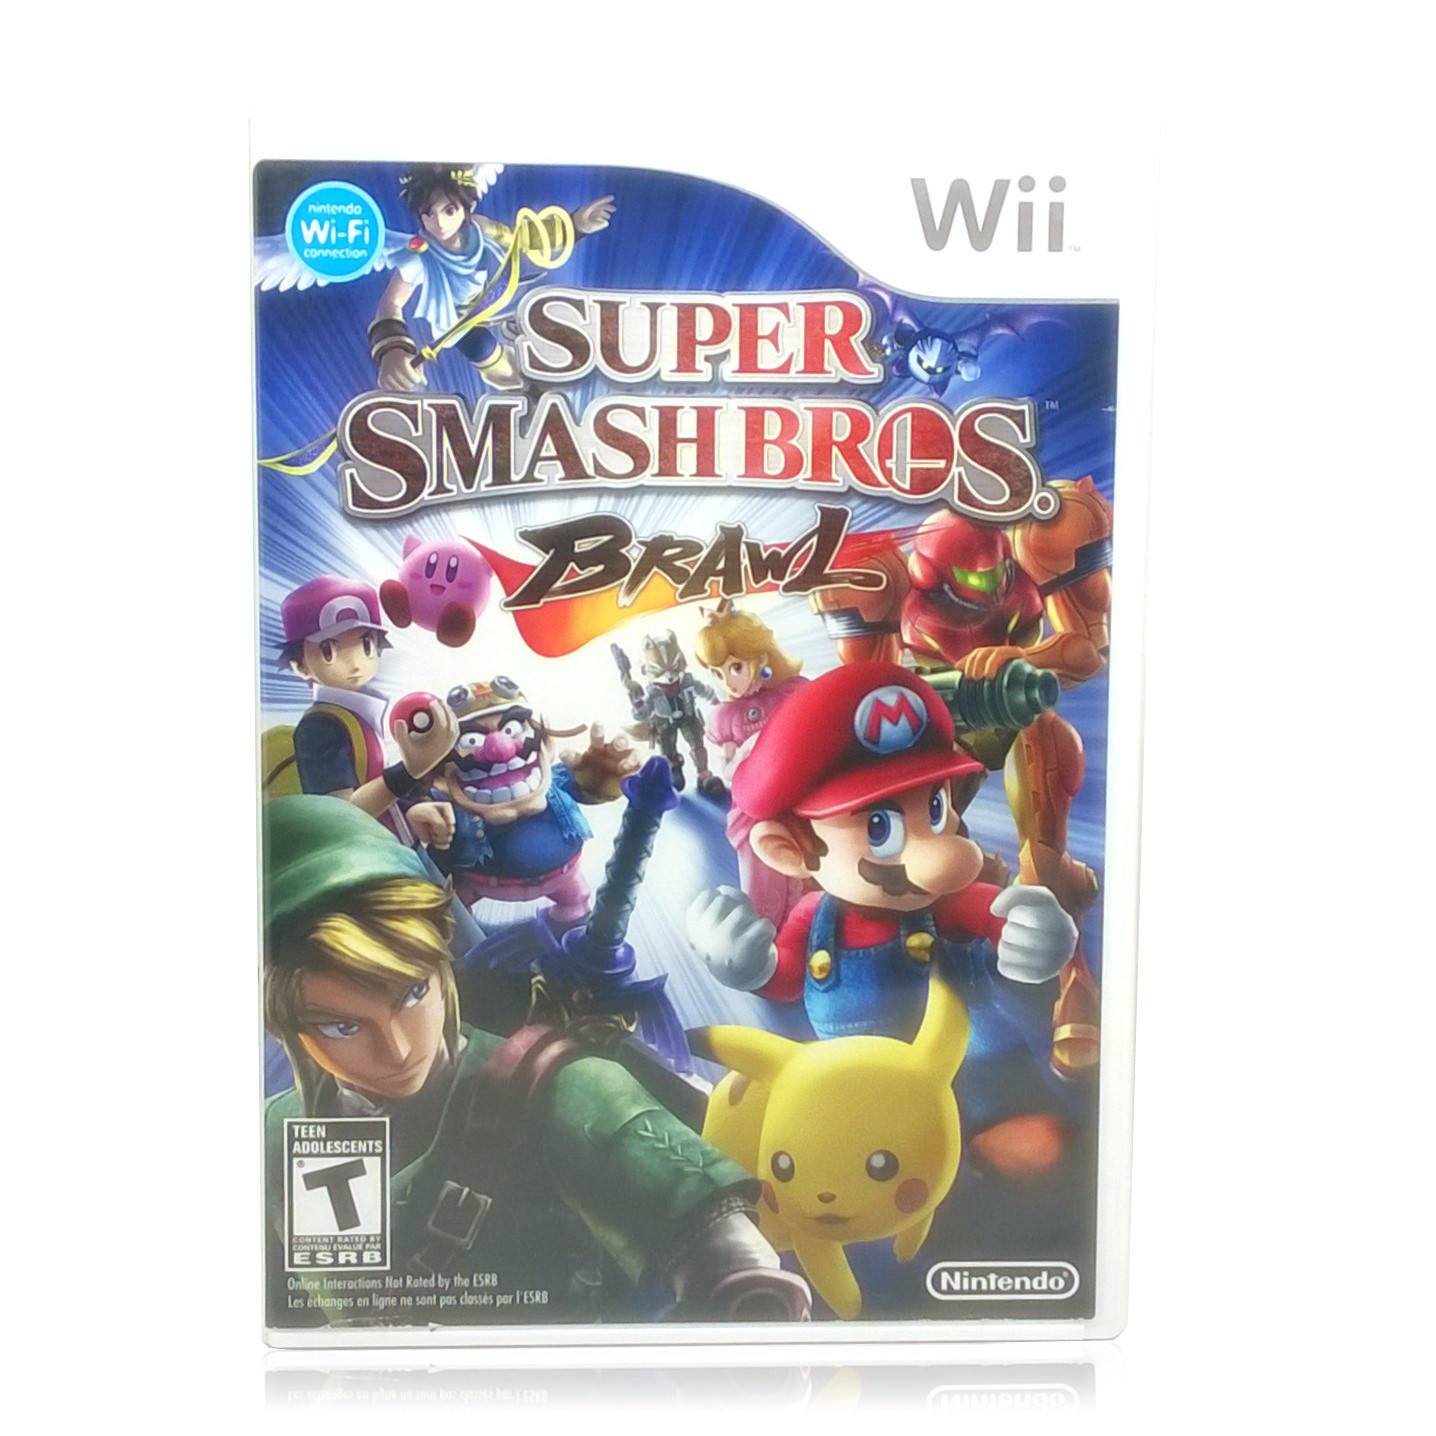 Super Smash Bros. Brawl Nintendo Wii Game - Case